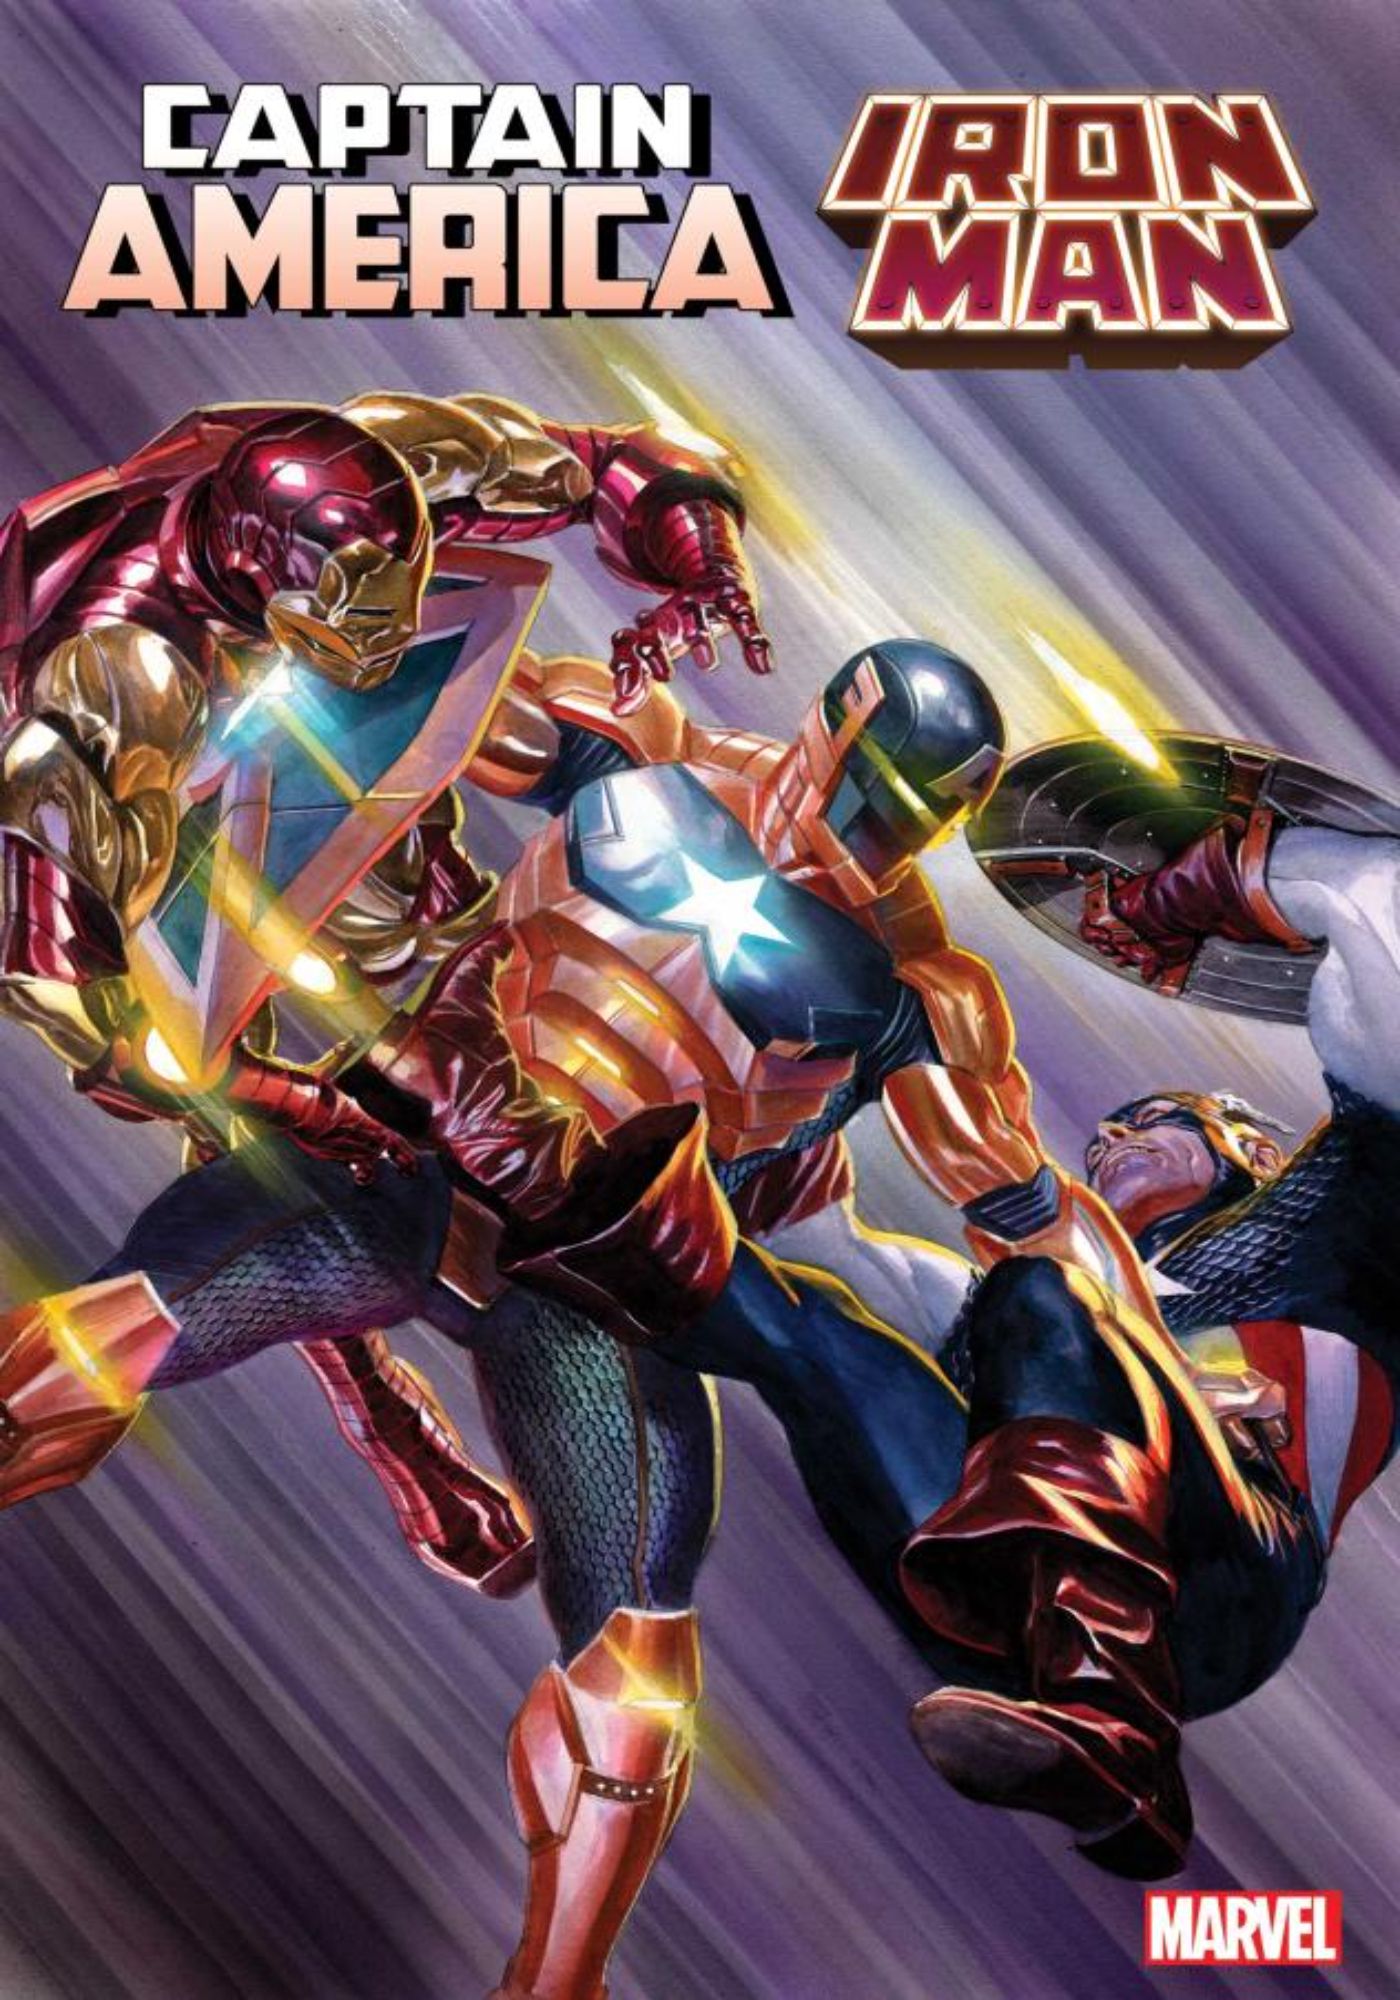 Captain America New Villain Iron Man